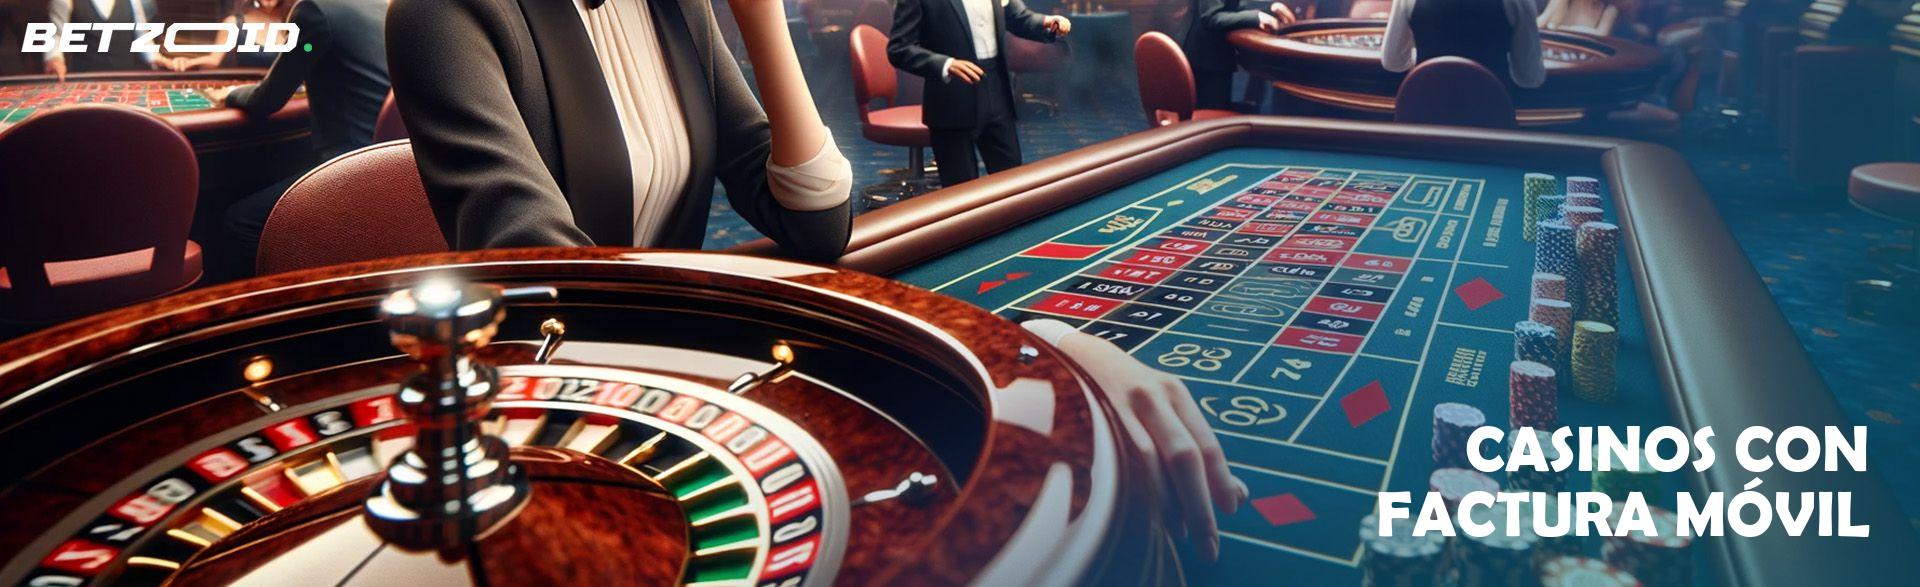 Casinos con Factura Móvil.